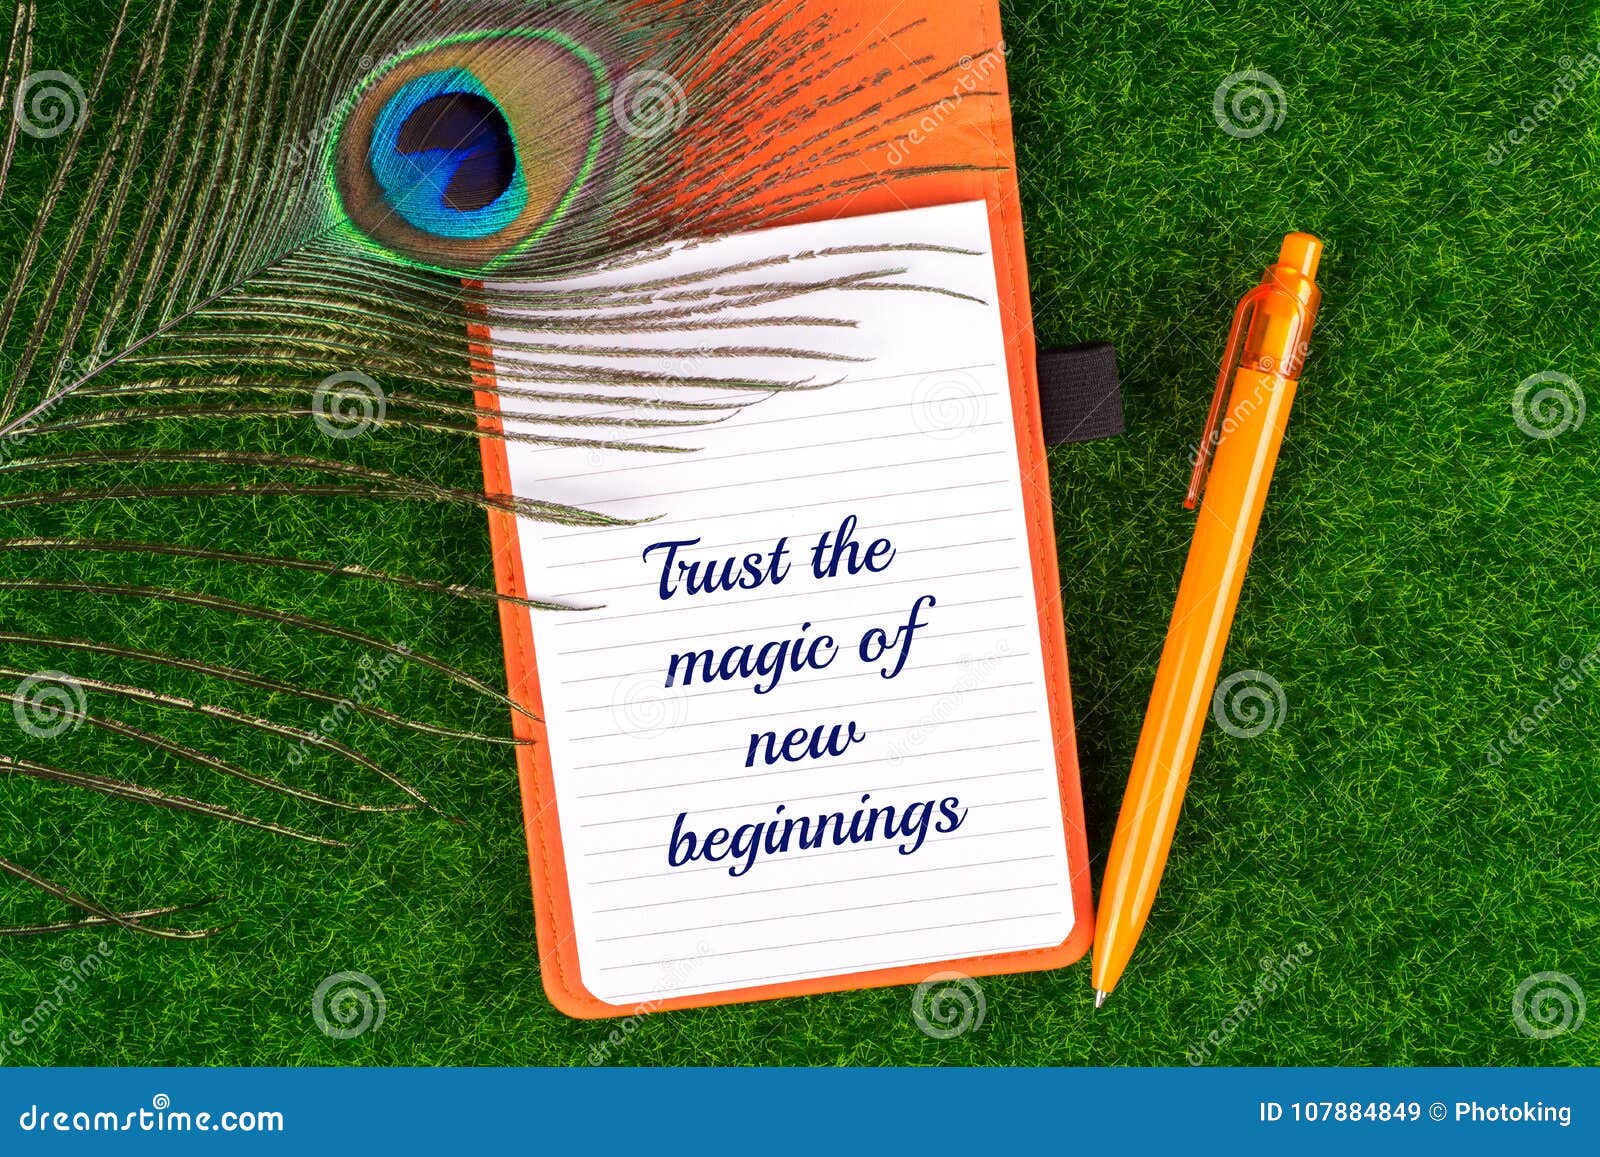 trust the magic of new beginnings